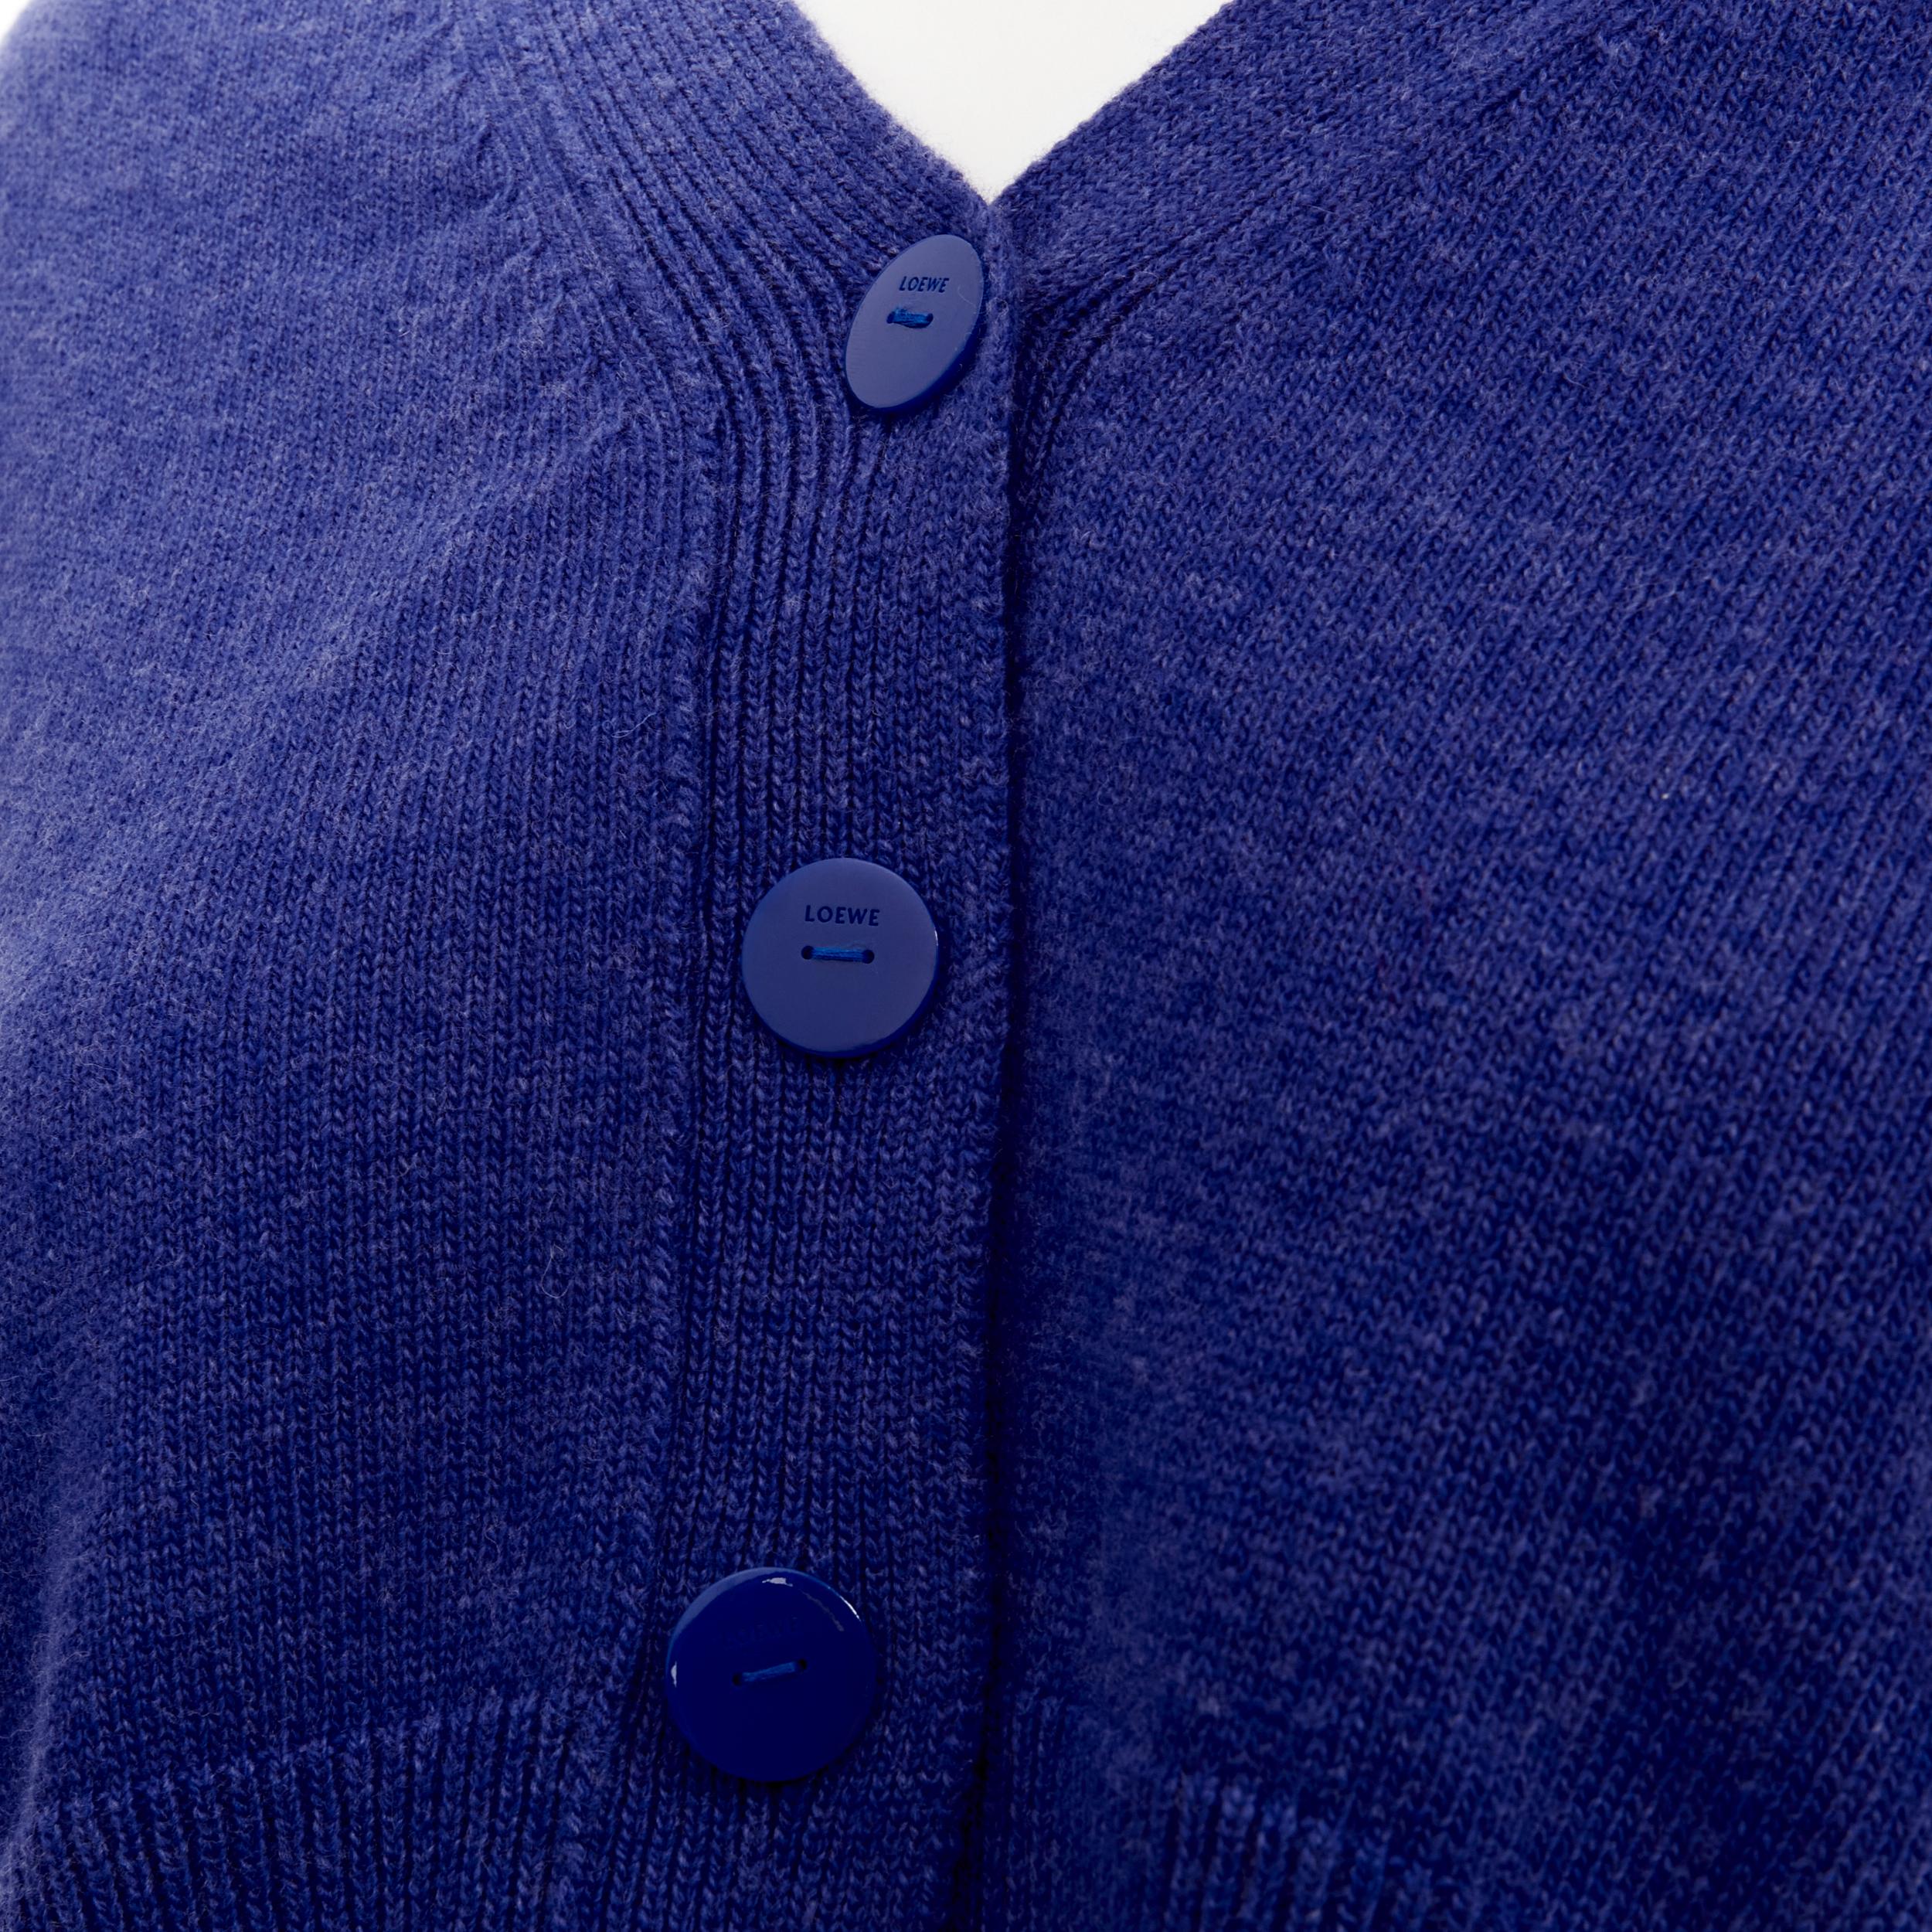 LOEWE pink Anagram logo blue 100% wool cropped cardigan top S For Sale 1